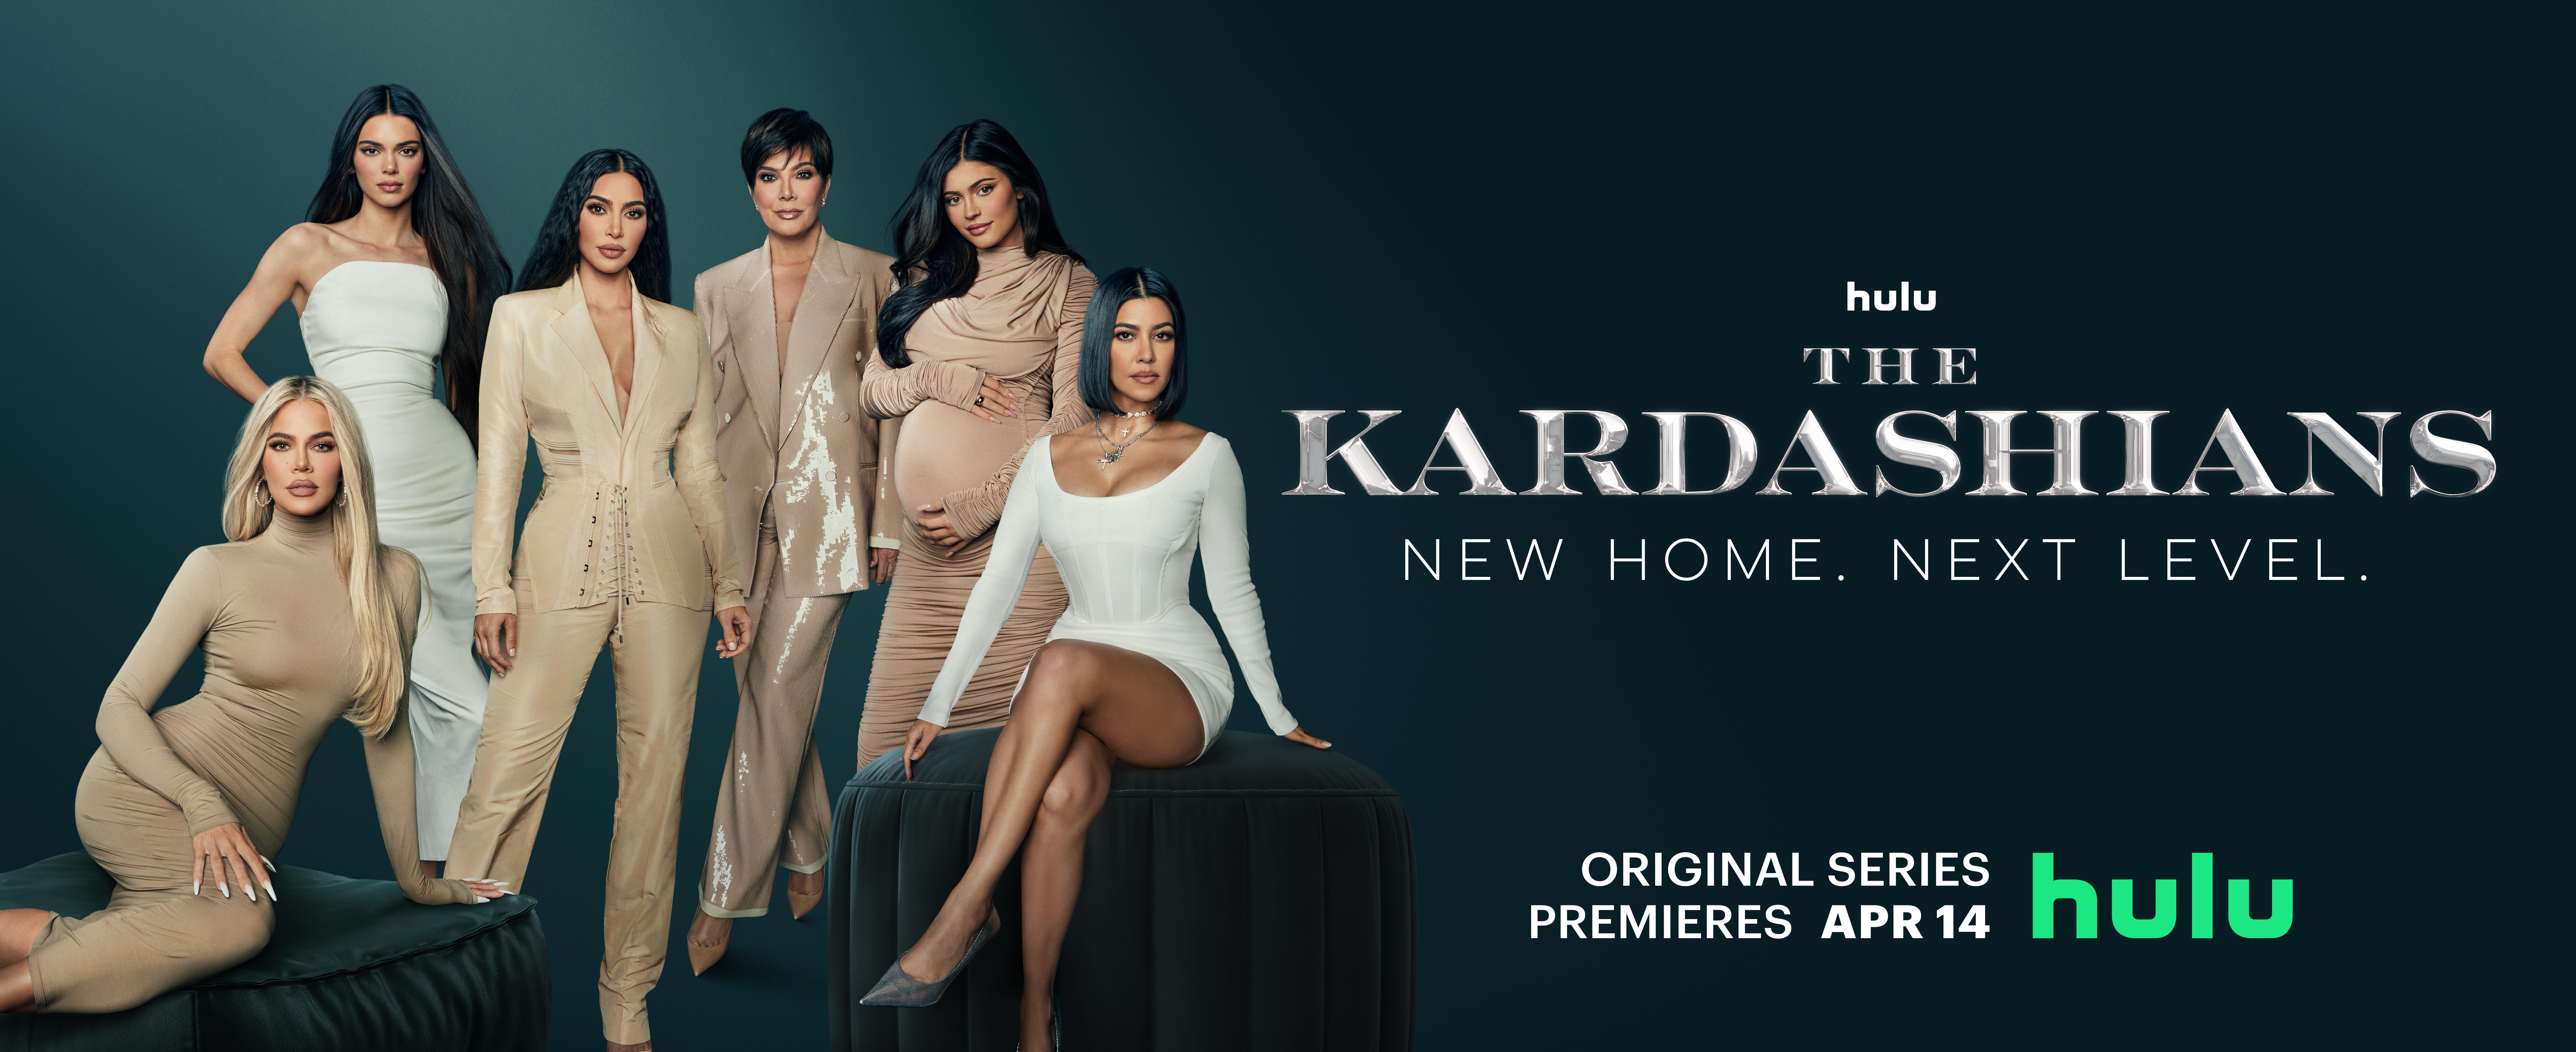 Khloe Kardashian, Kendall Jenner, Kim Kardashian, Kris Jenner, and Kourtney Kardashian pose for a promotional image for their new show, 'The Kardashians,' premiering exclusively on Hulu.